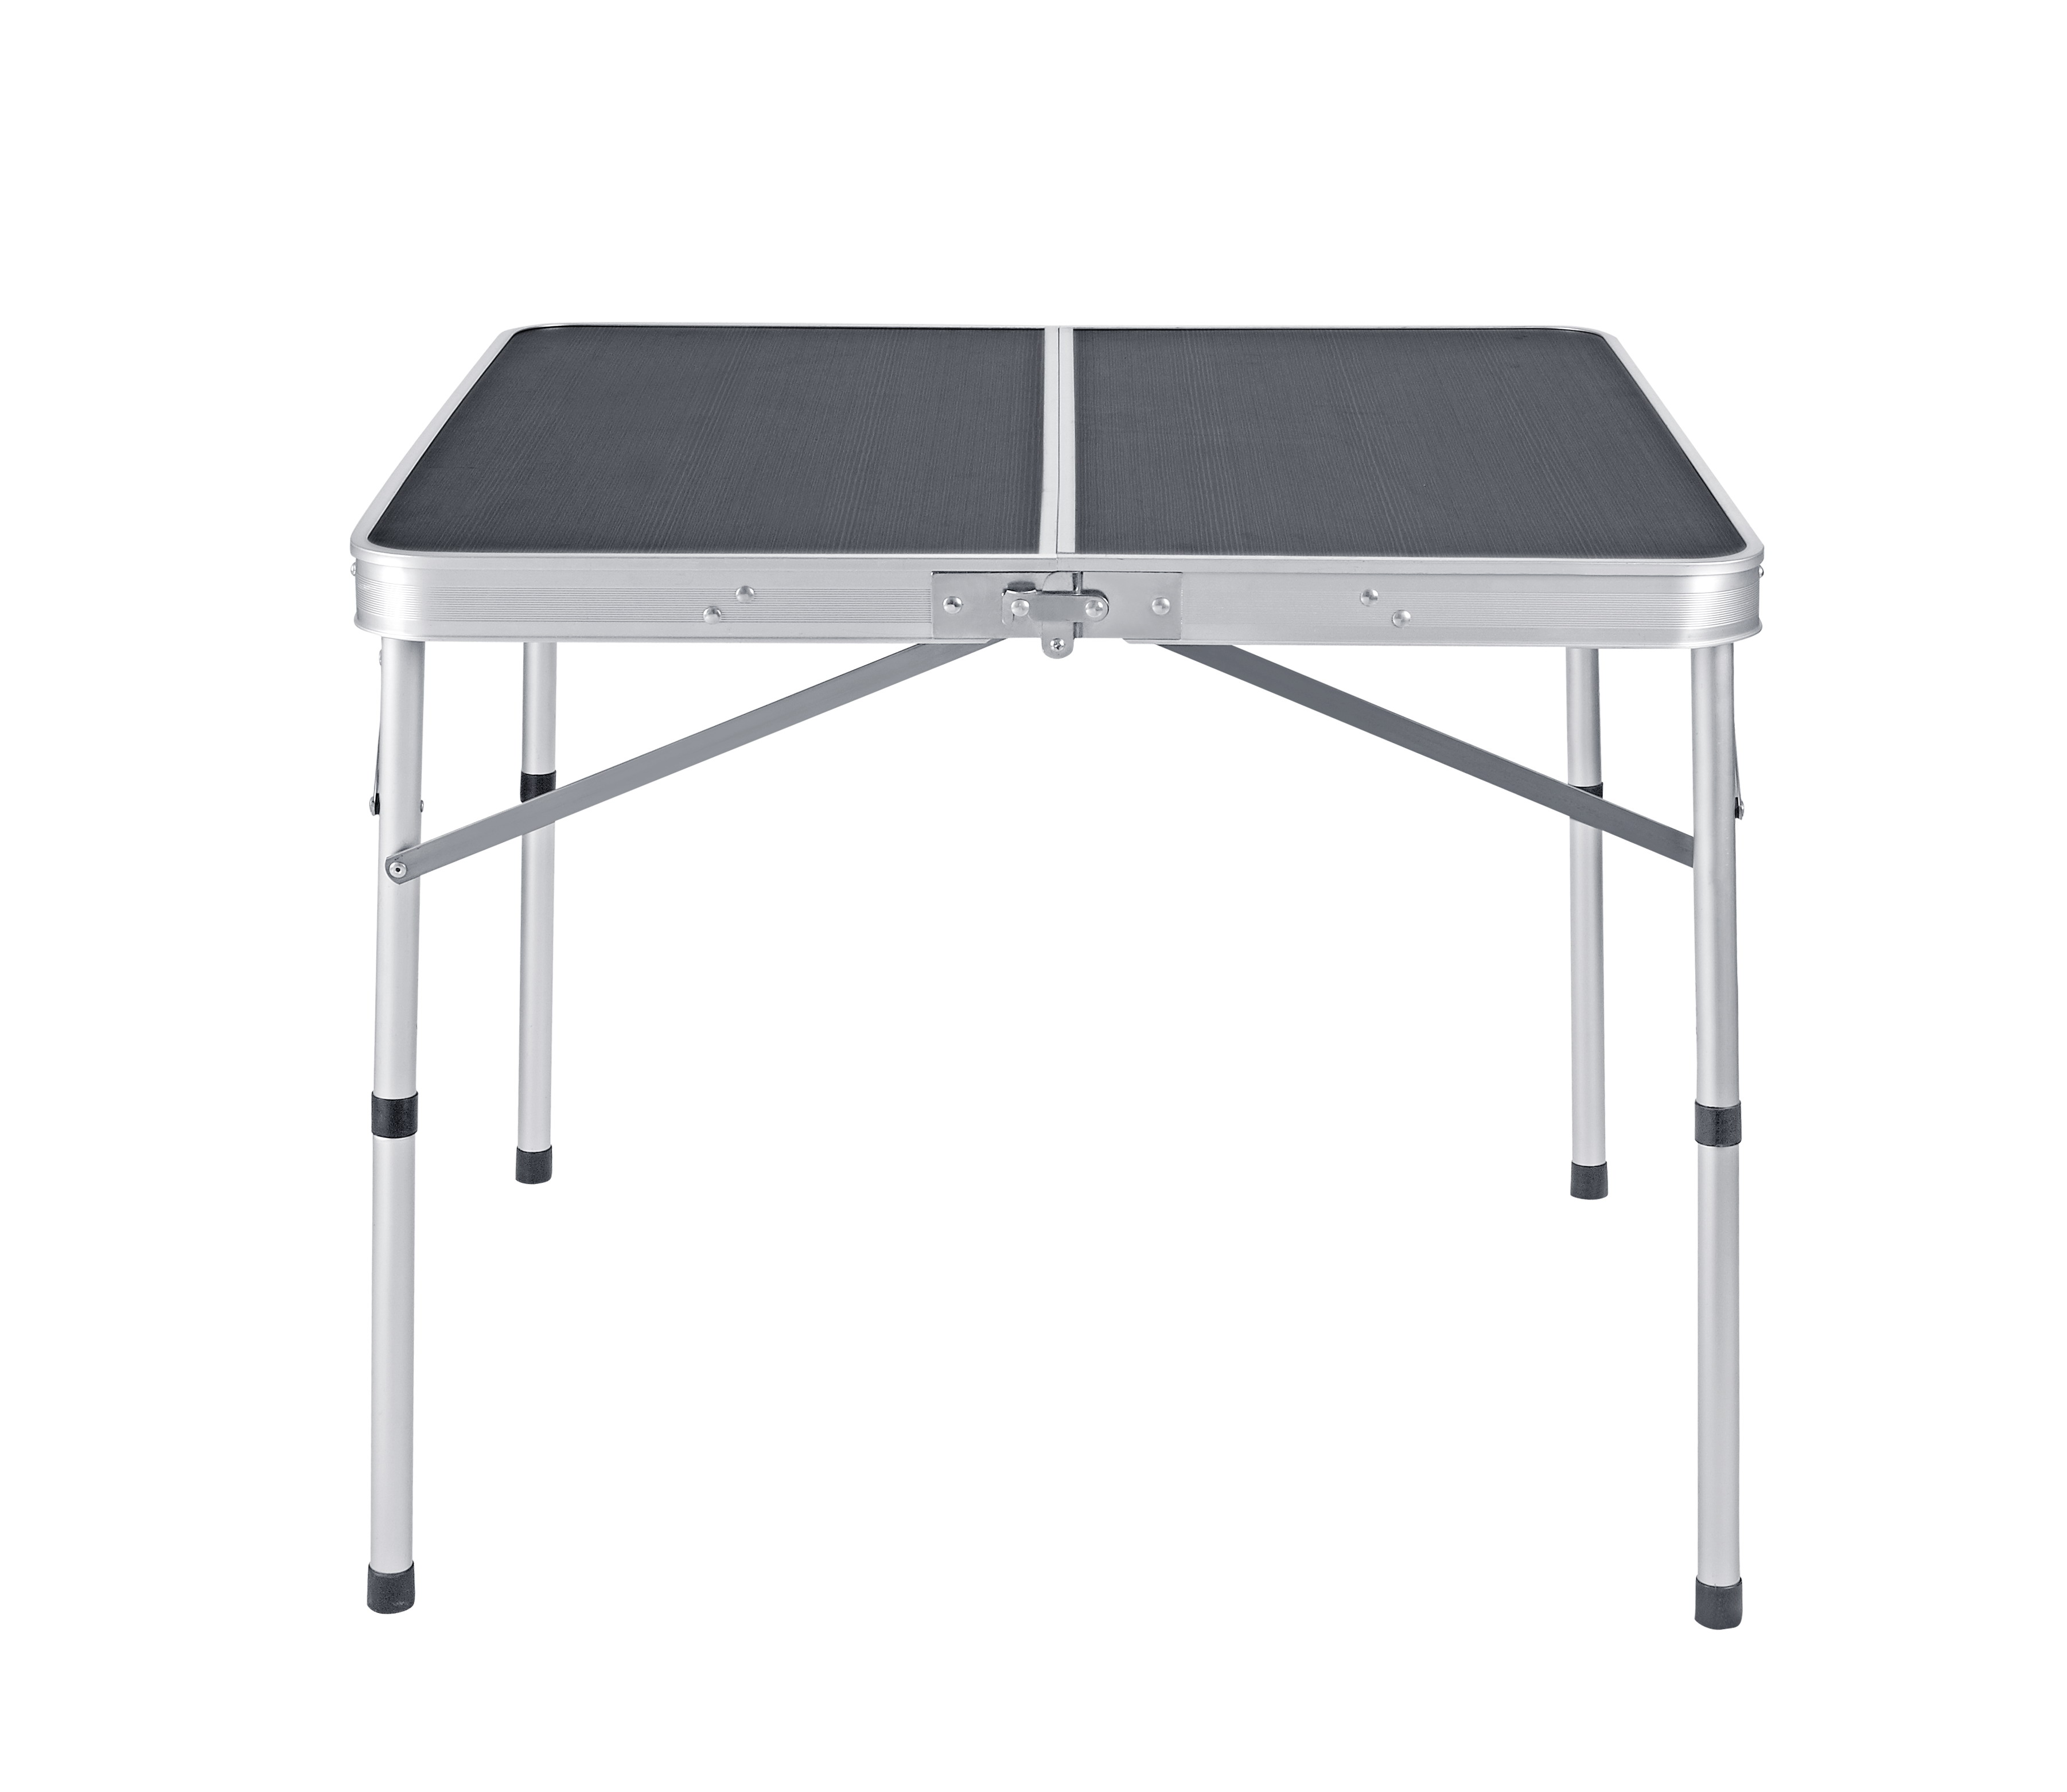 Uplion Aluminum MDF Top Folding Portable Camping Table